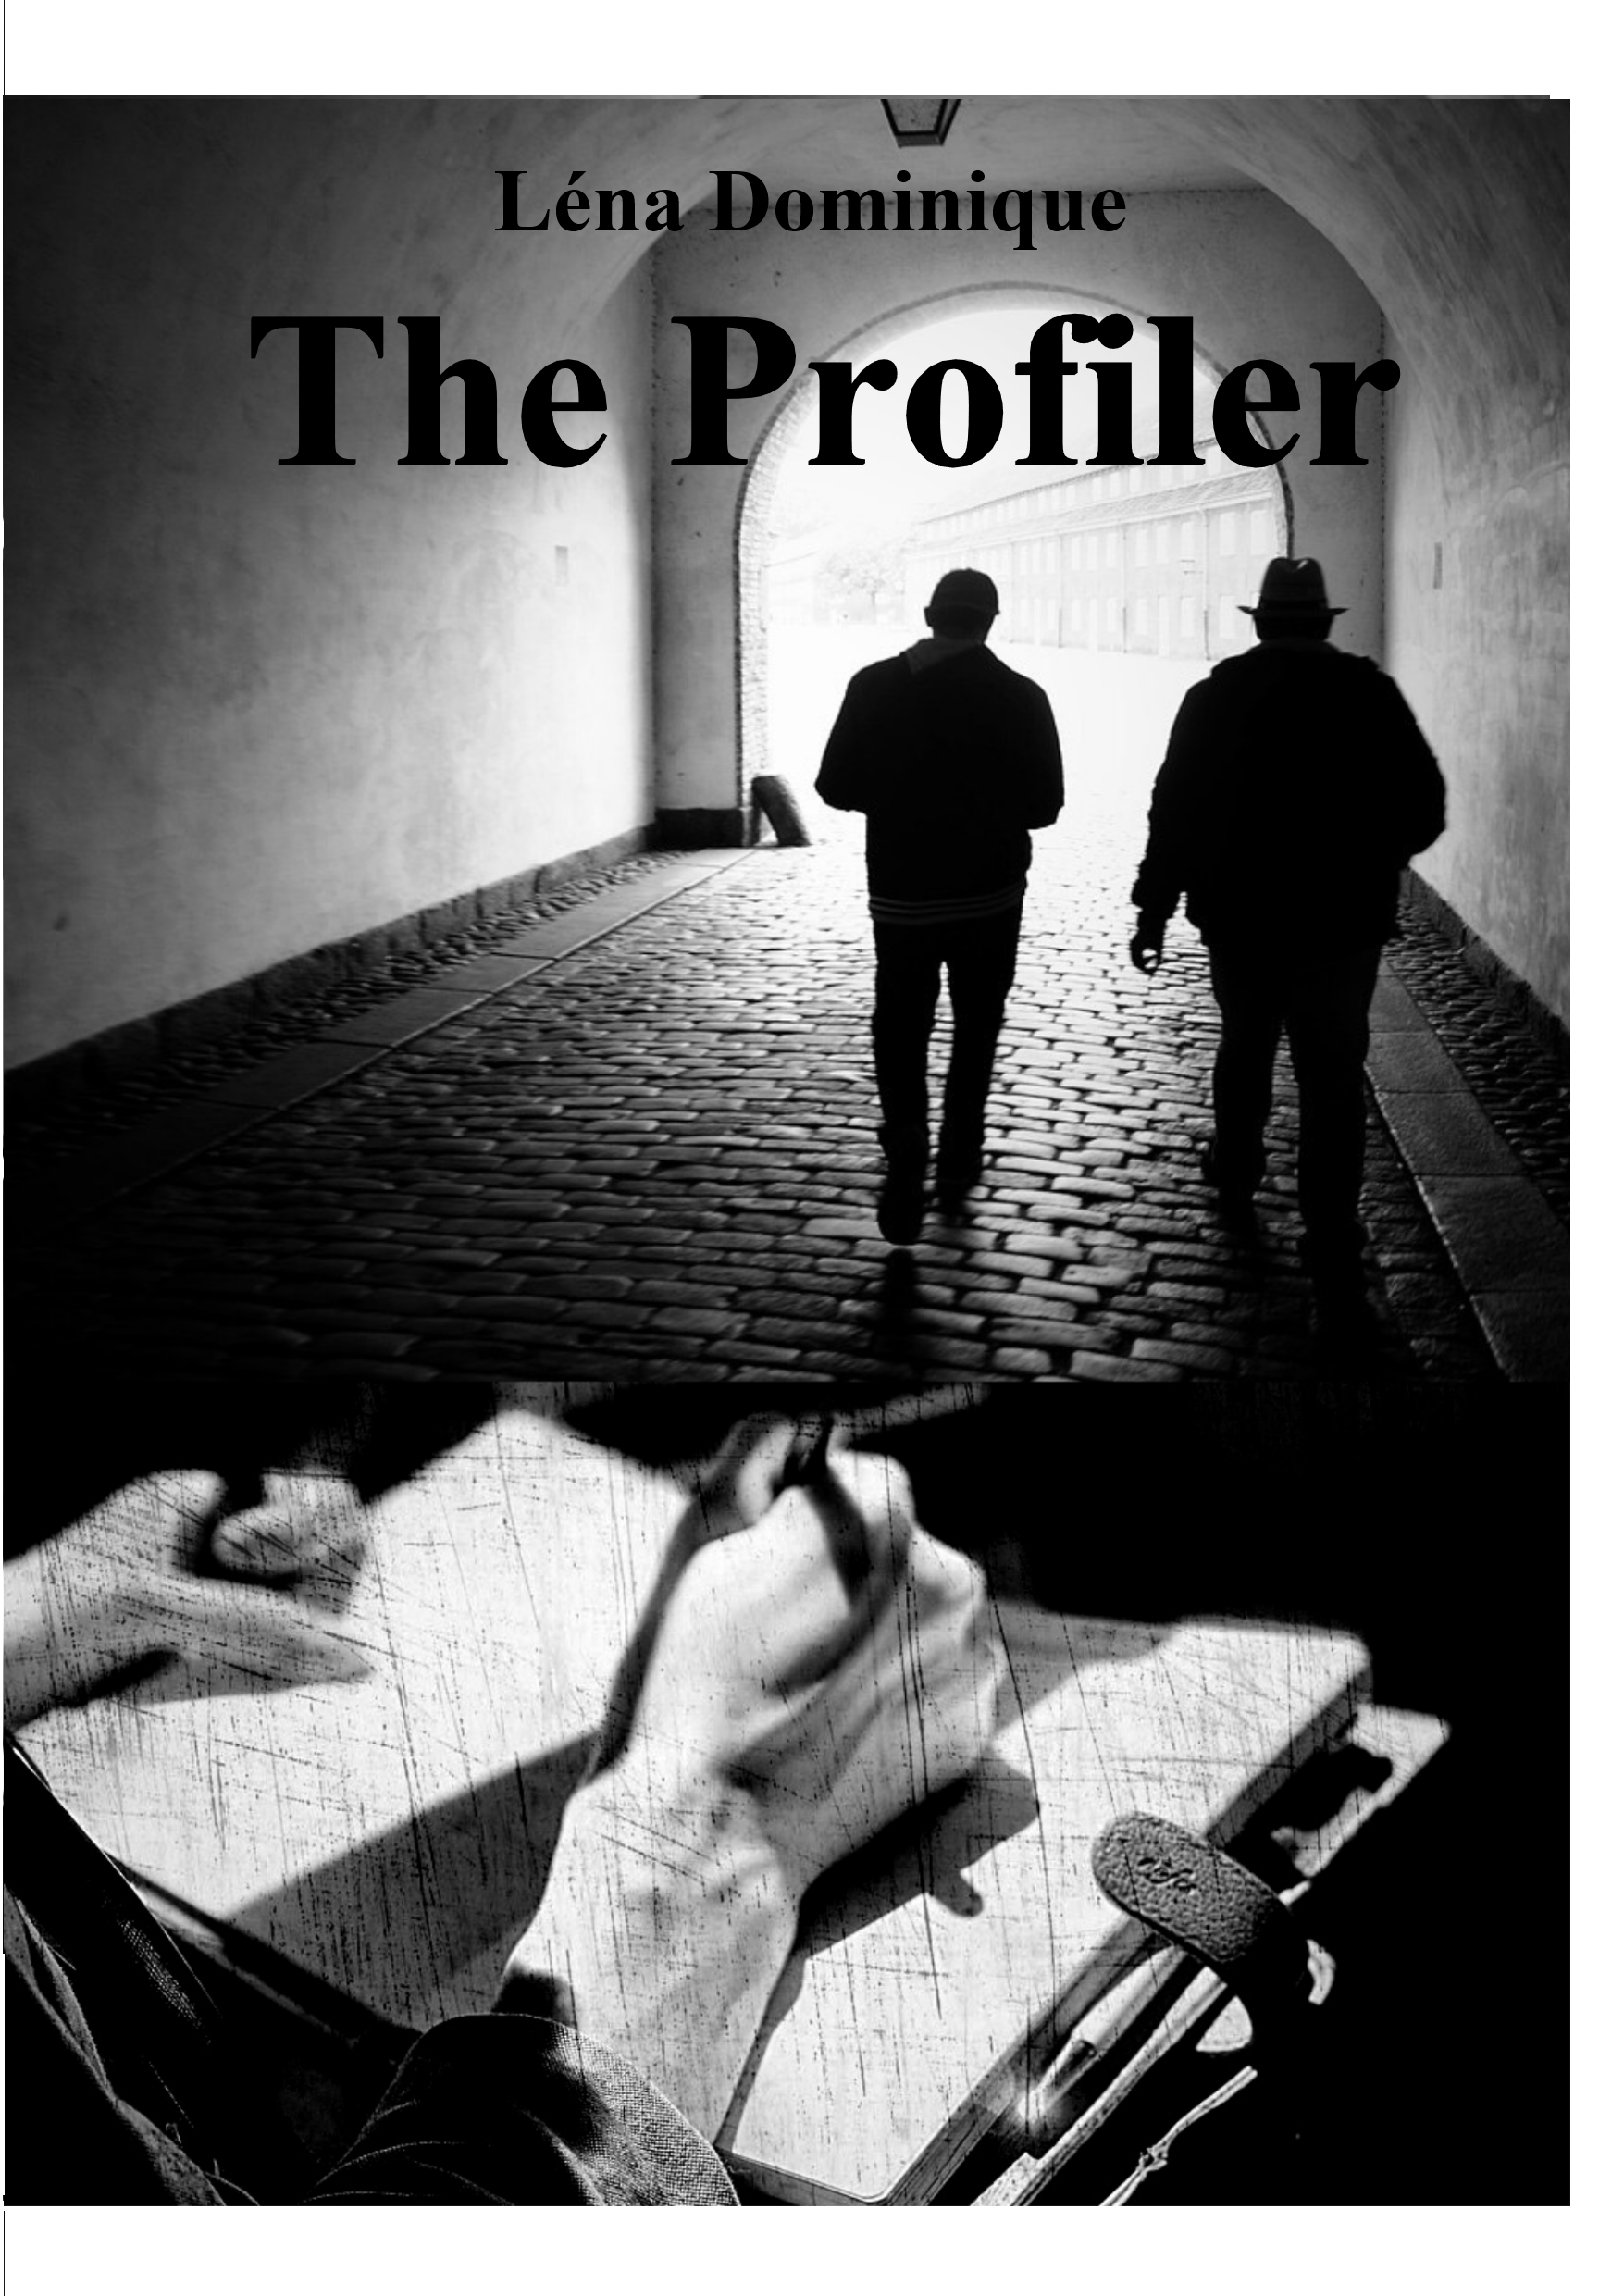 The profiler